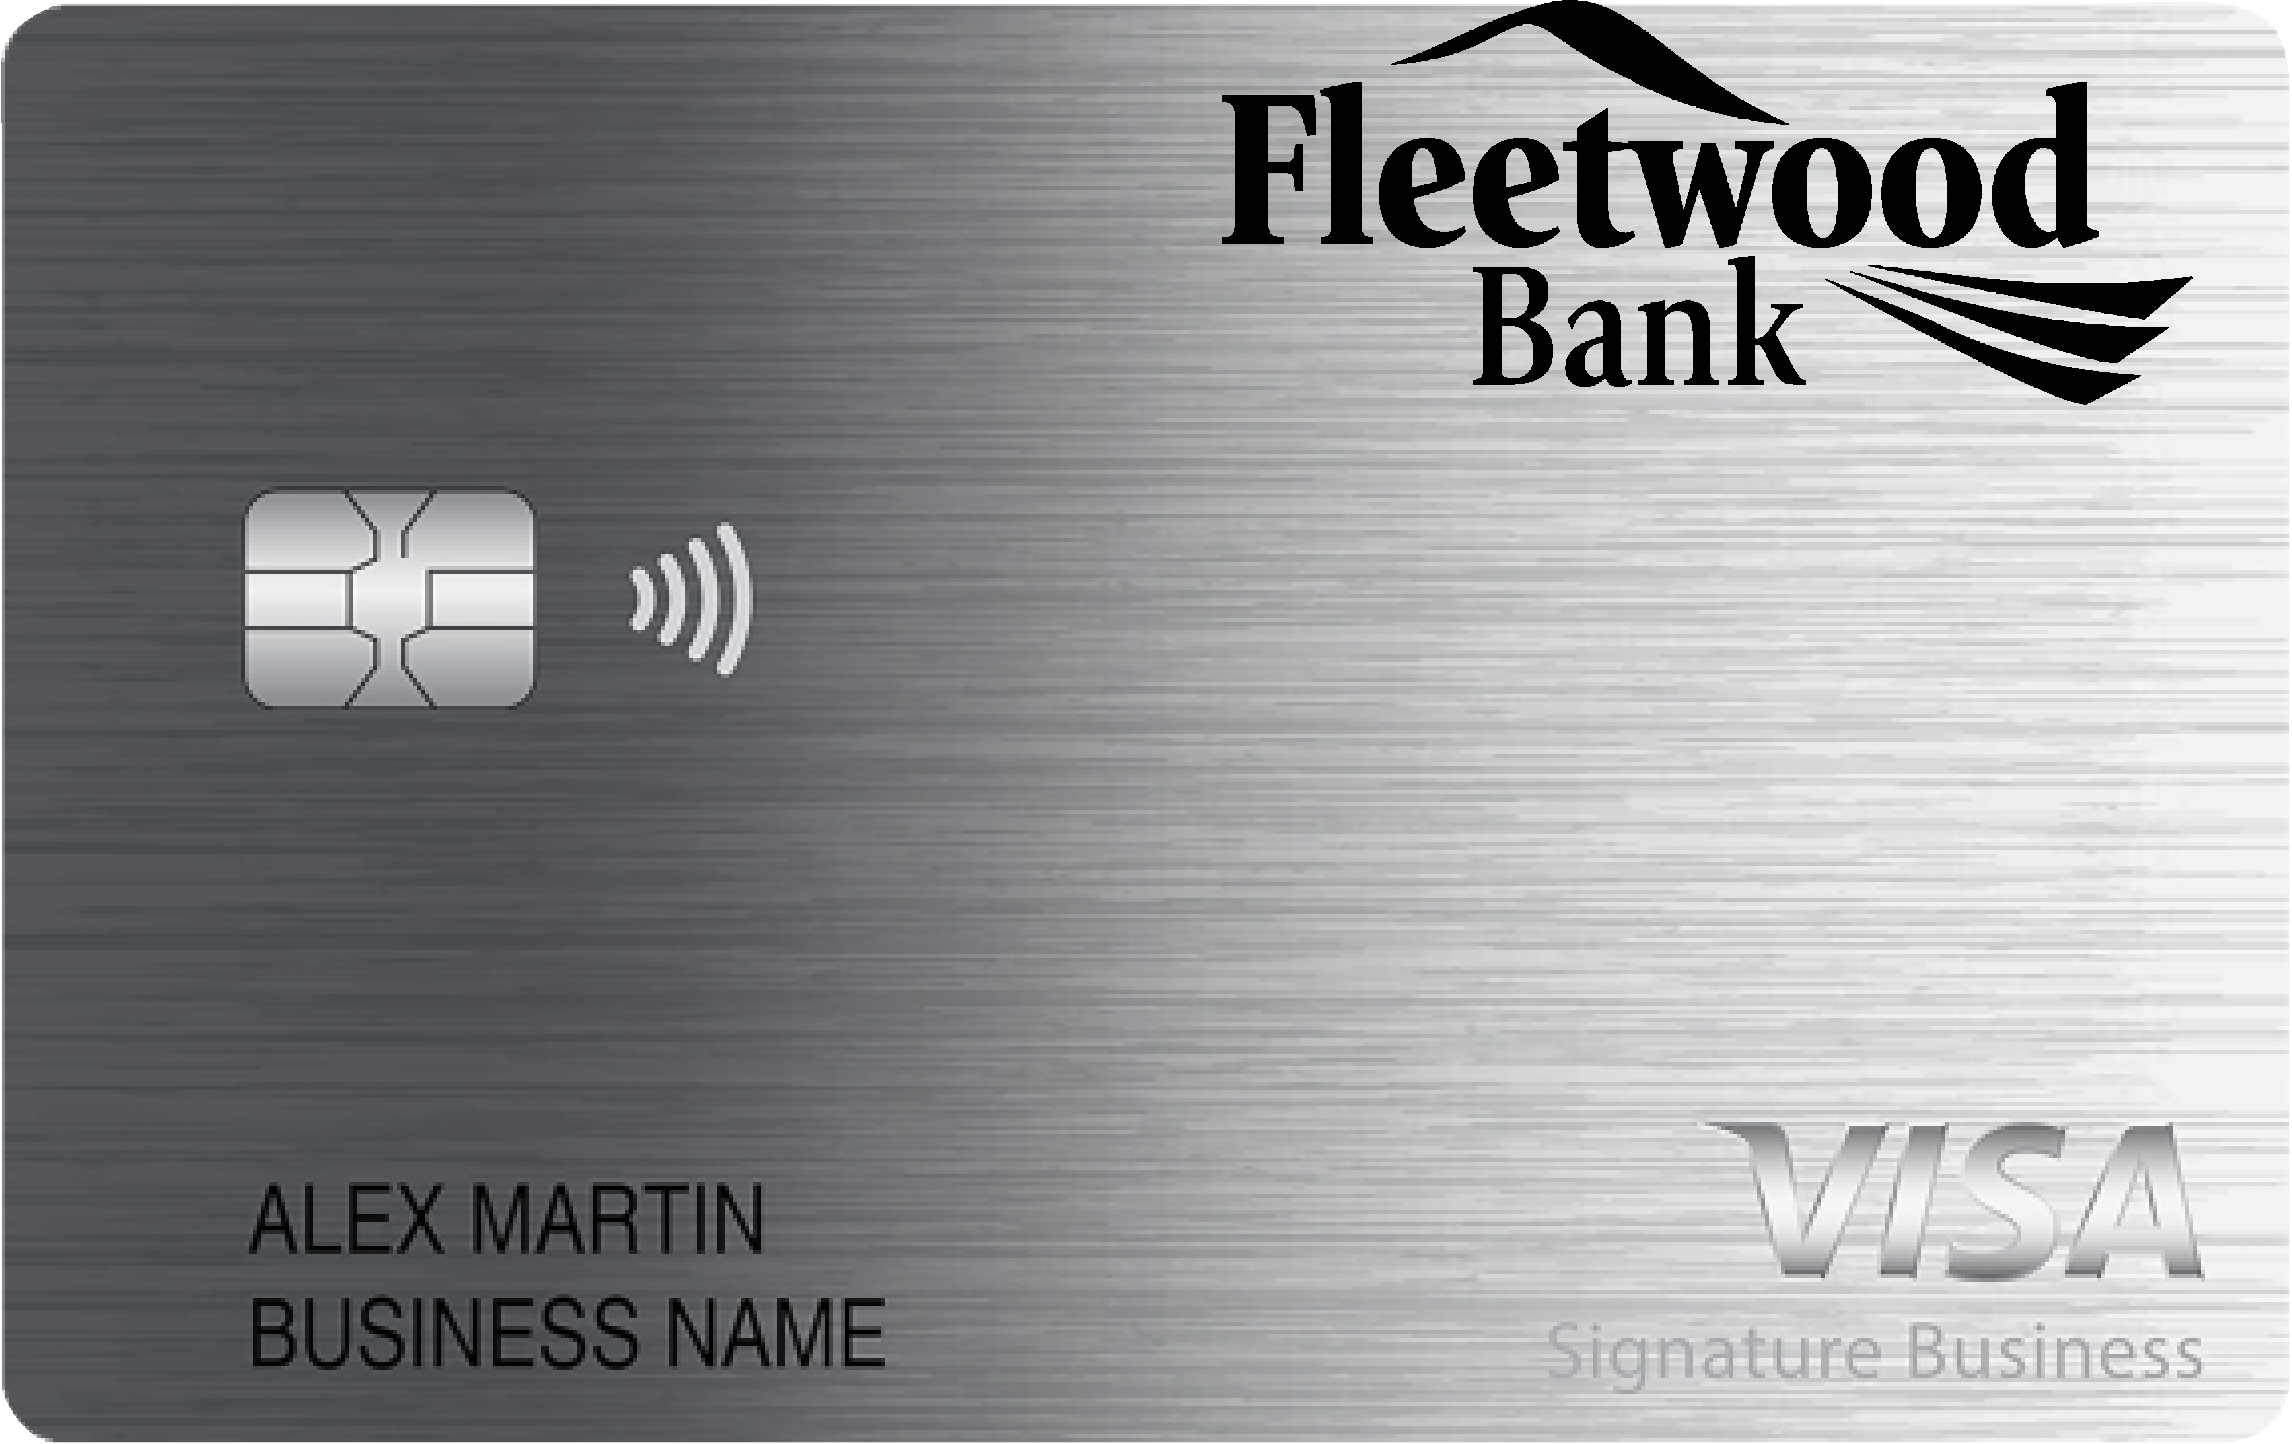 Fleetwood Bank Smart Business Rewards Card